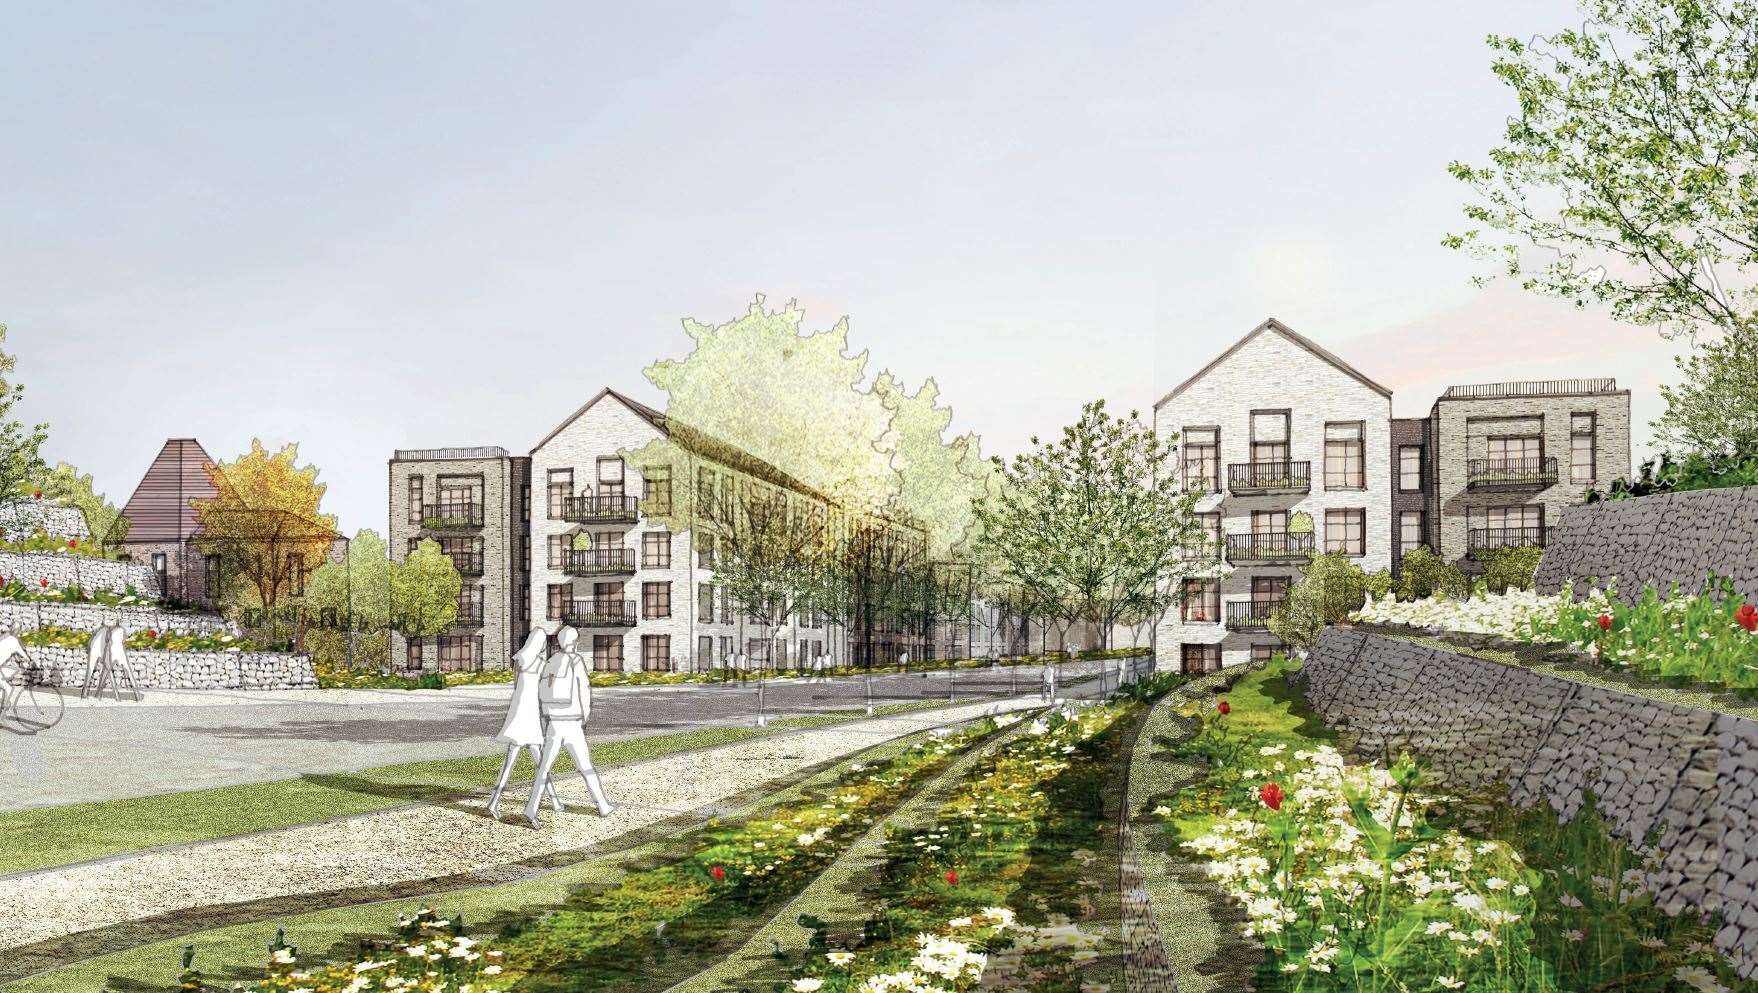 How the Ashmere village will look on the Ebbsfleet Garden City development